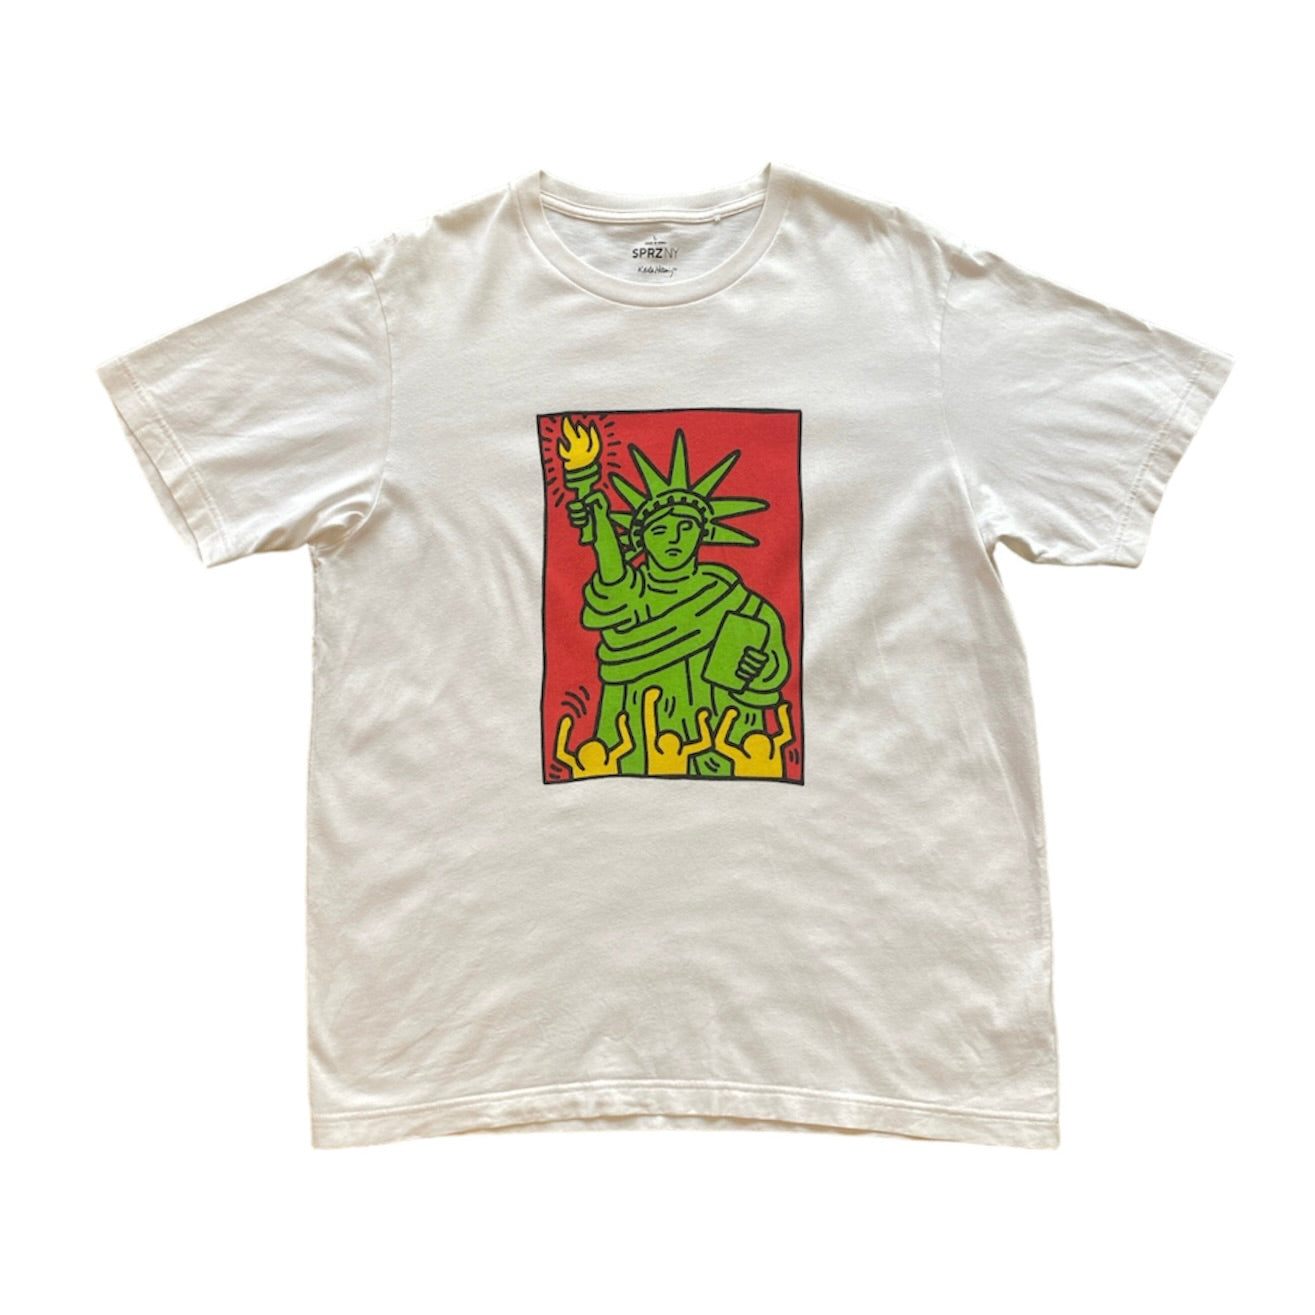 Uniqlo x Keith Haring Liberty SPRZNY White Tshirt